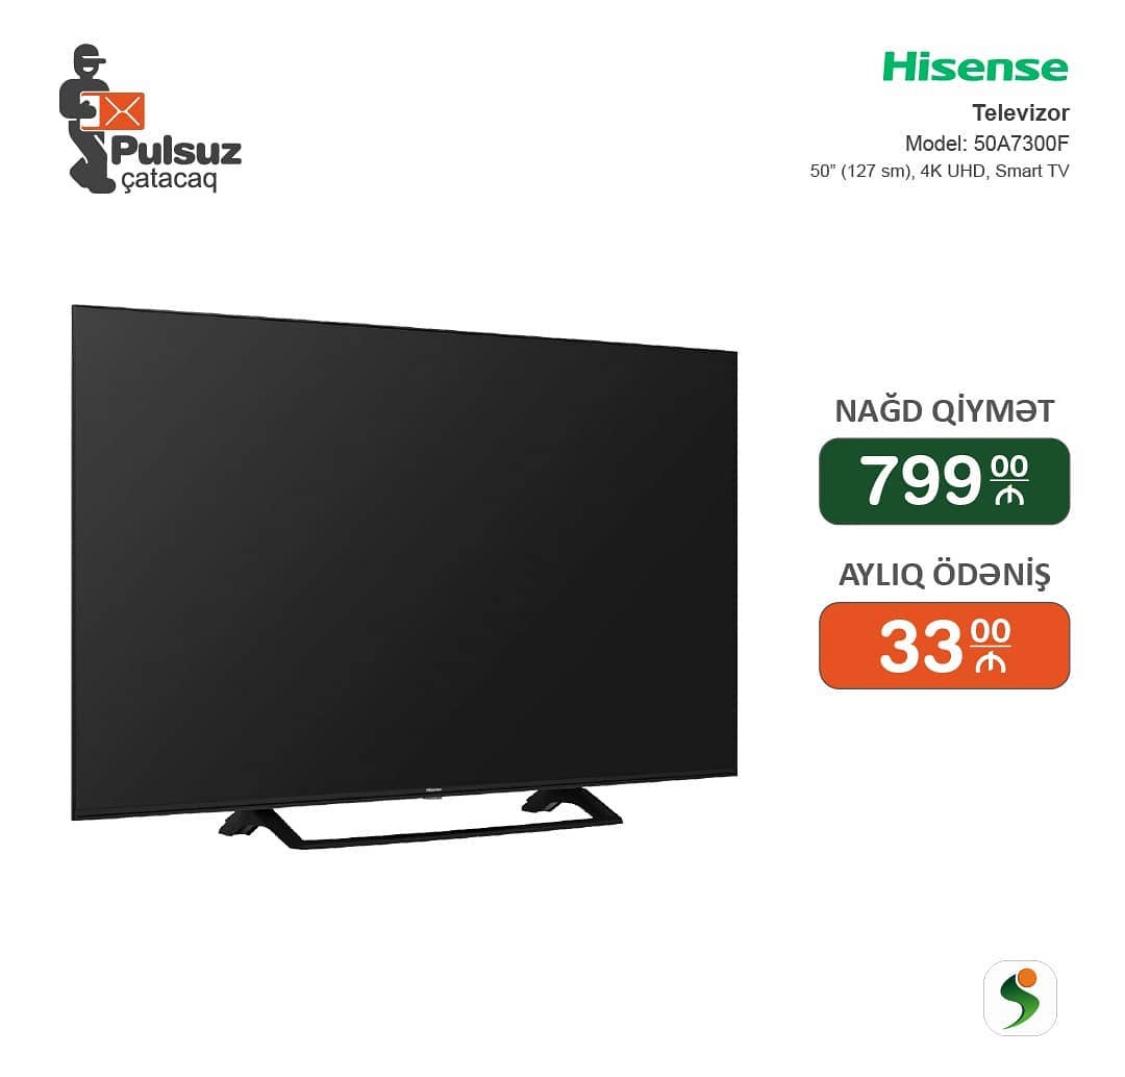 Hisense Tv 127 sm Smart UHD ekran İlkin Odenissiz Arayissiz ve Zaminsiz